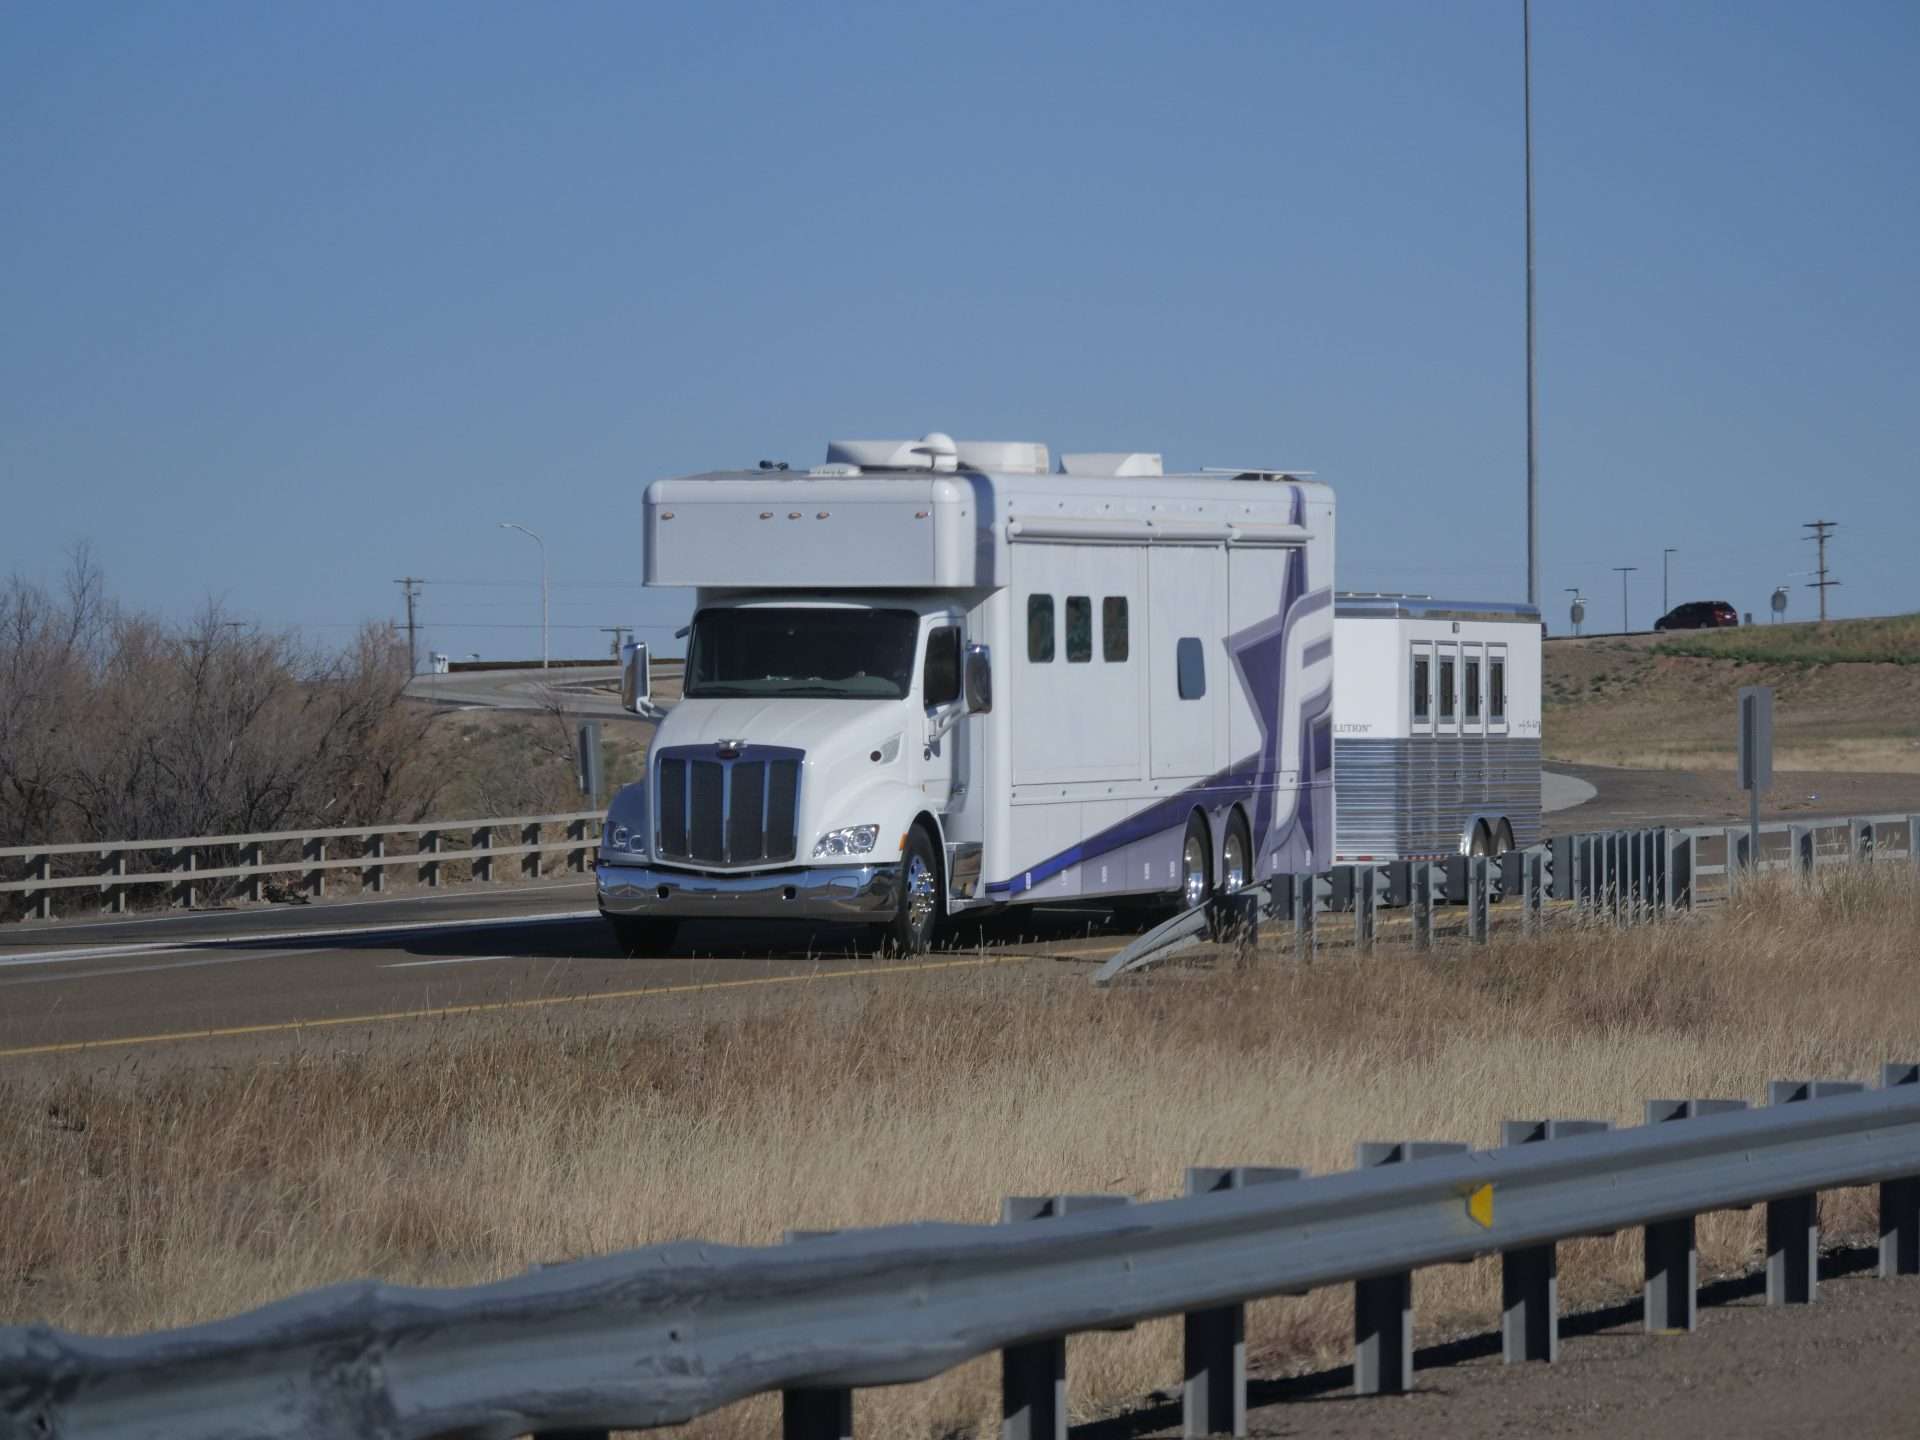 Super C motorhome towing a trailer